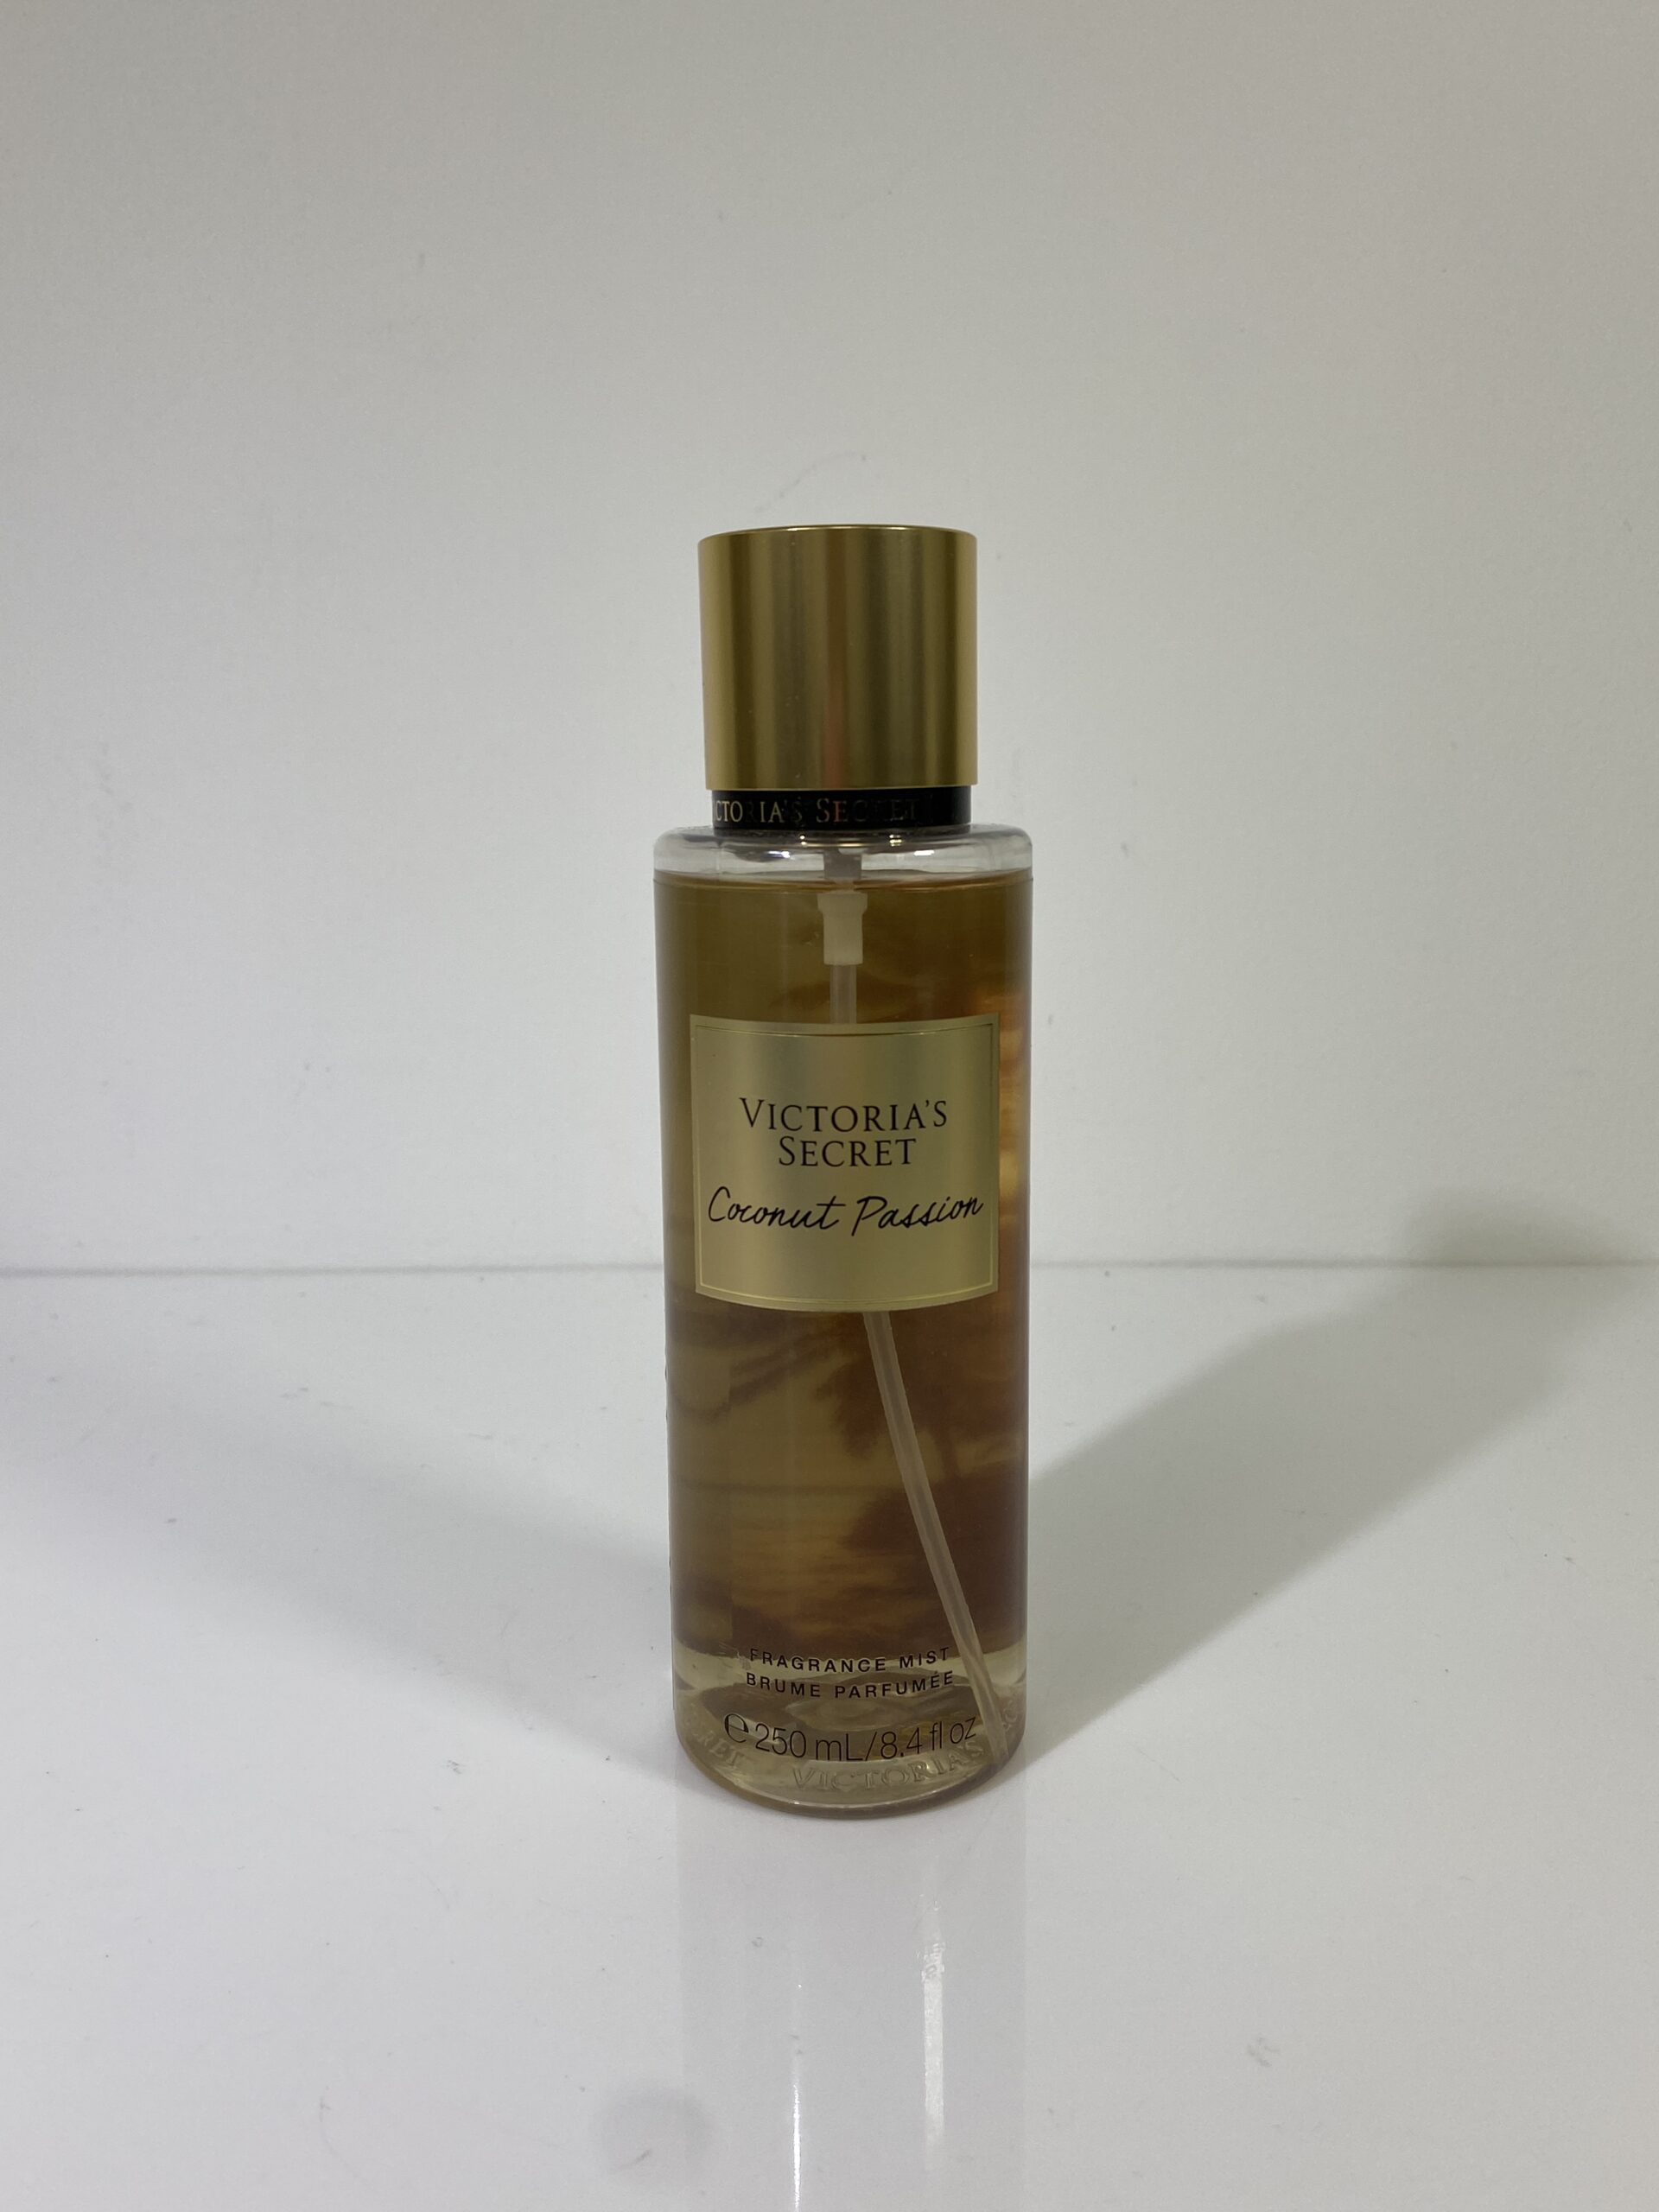 VICTORIA’S SECRET Coconut Passion Fragrance Mist 8.4oz 250ml New